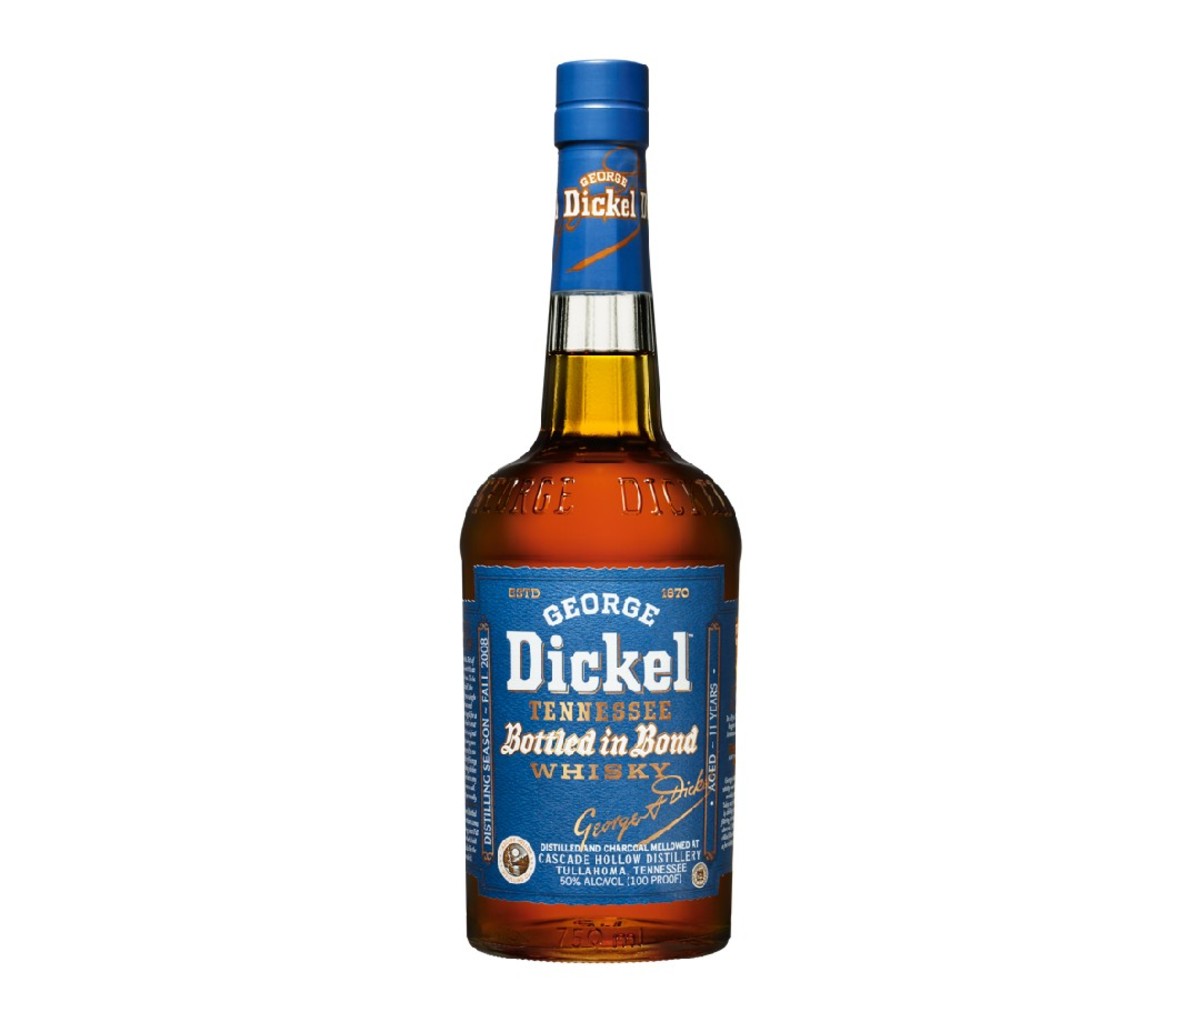 A bottle of George Dickel Bottled in Bond whiskey.